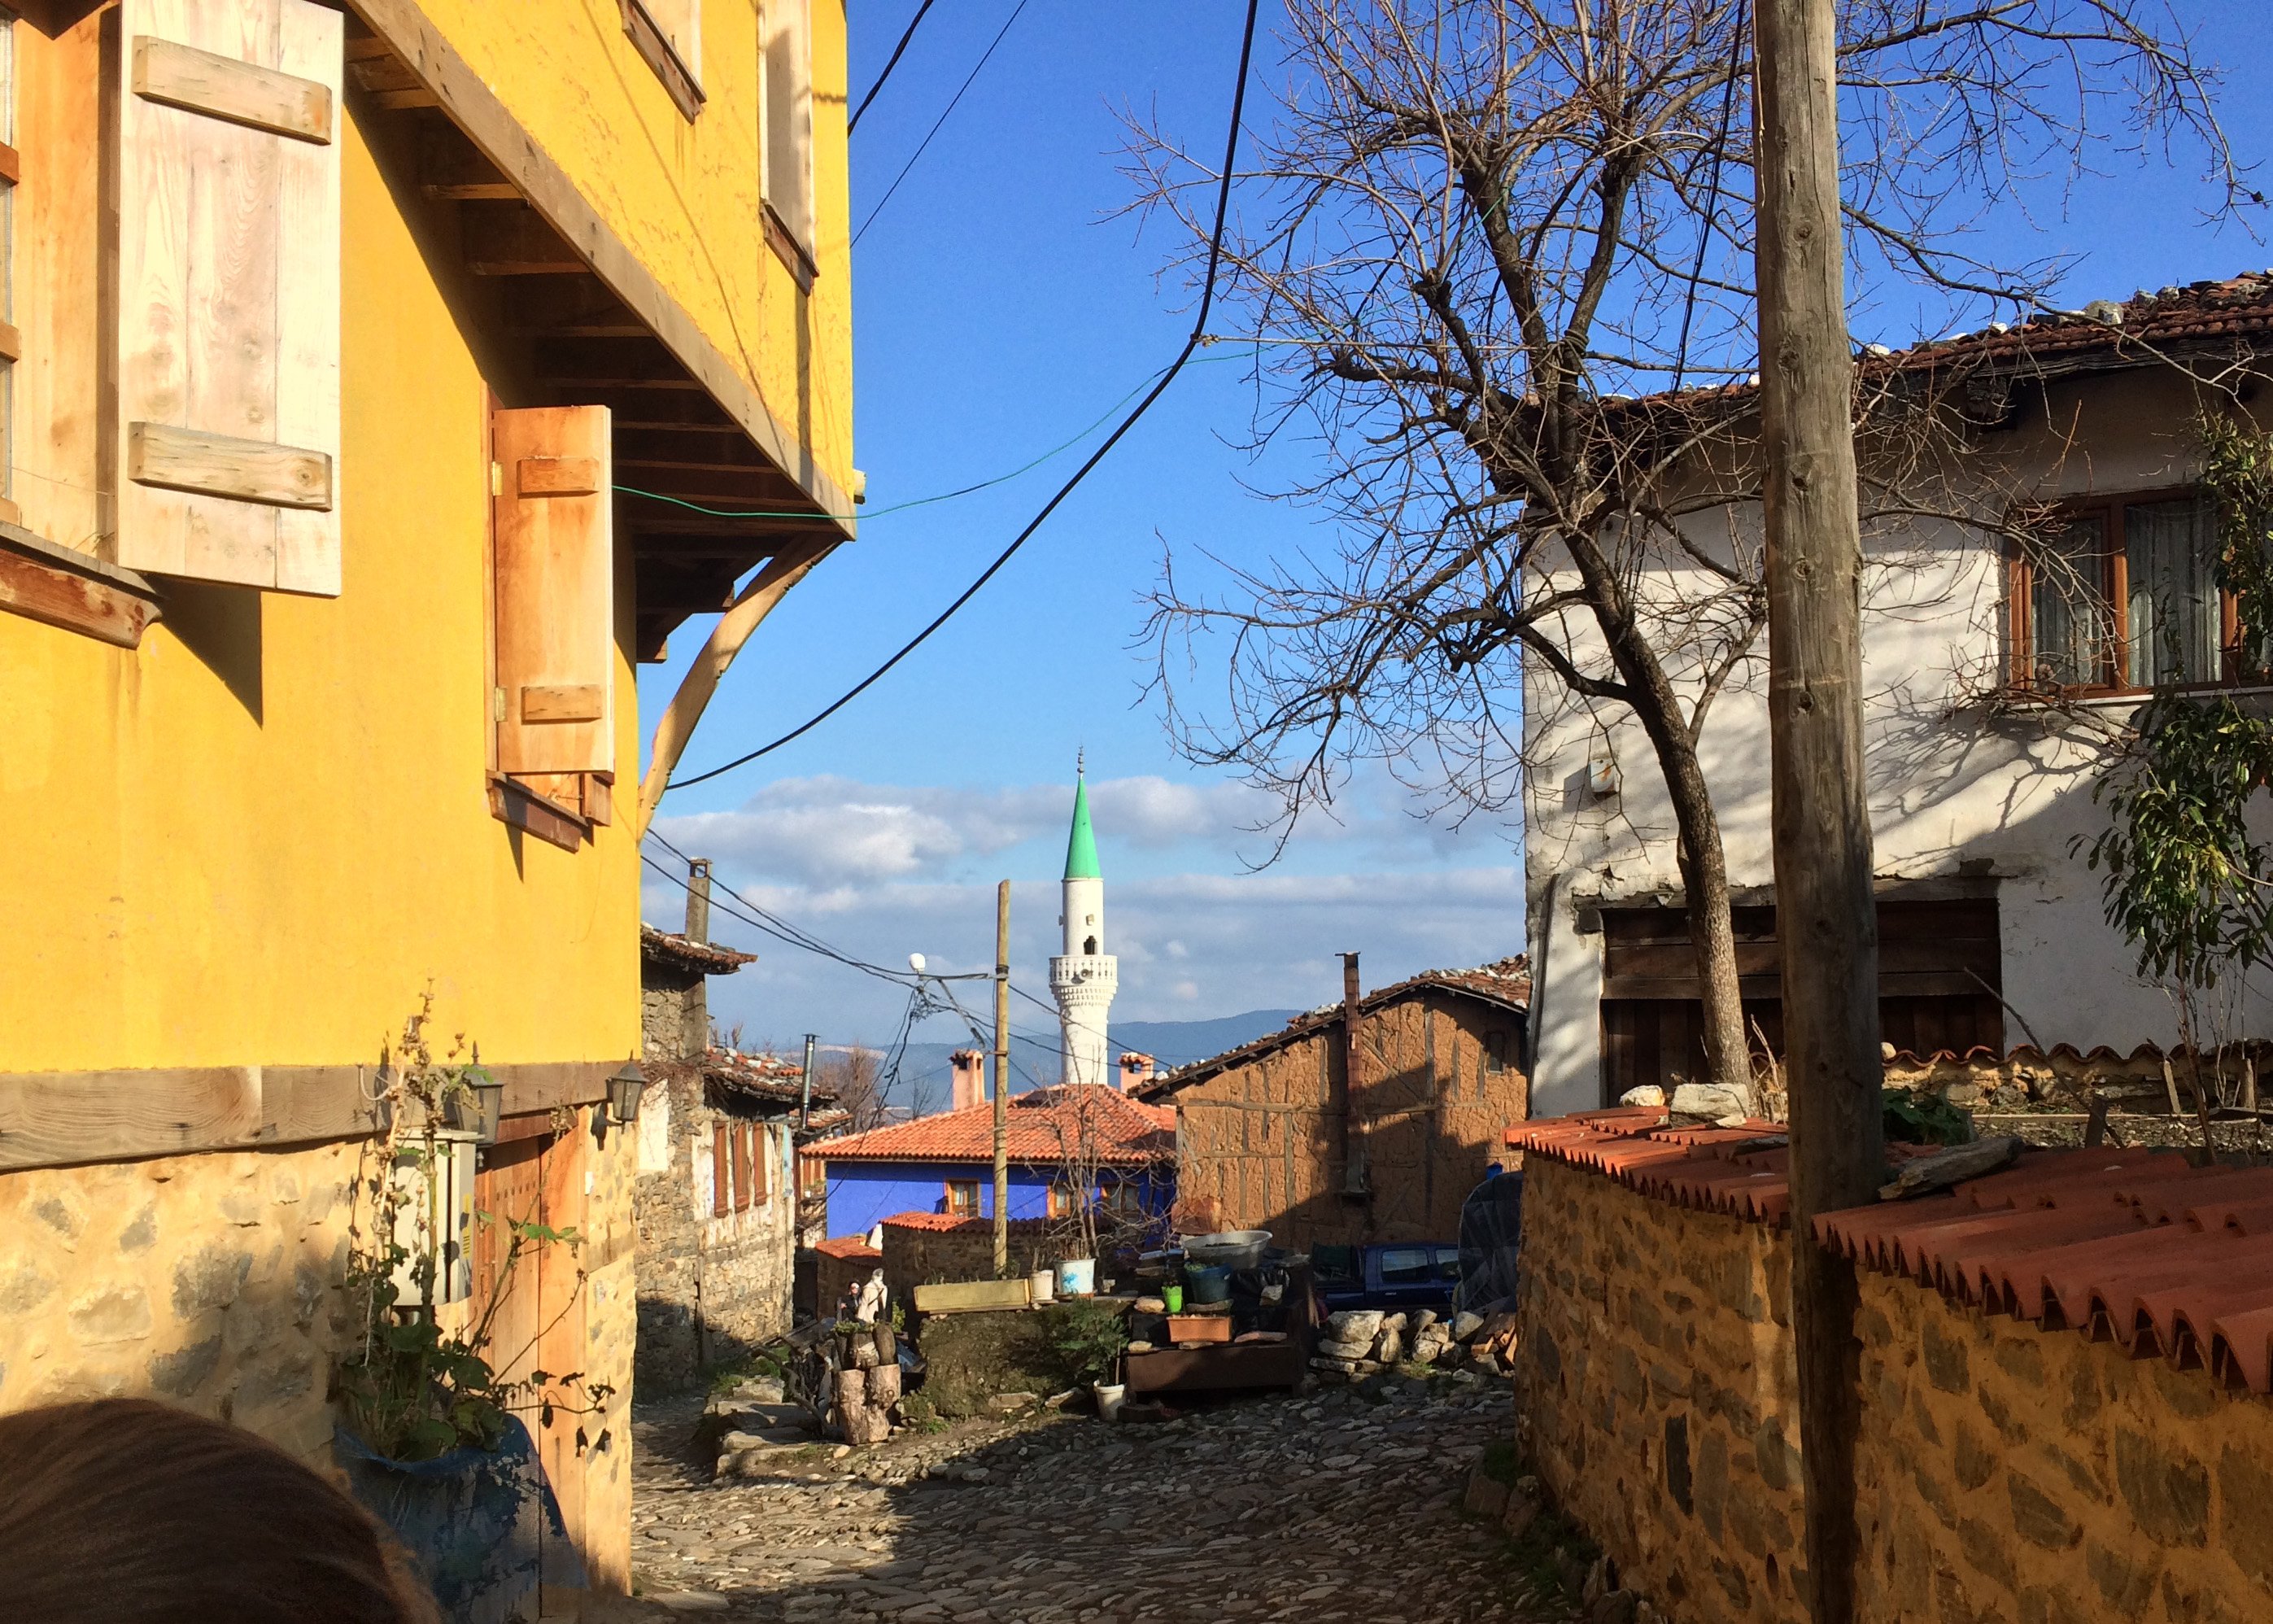 The colorful cobblestone streets of Cumalıkızık, in Bursa, Turkey, Feb. 23, 2020. (Gabriela Akpaça / Daily Sabah)